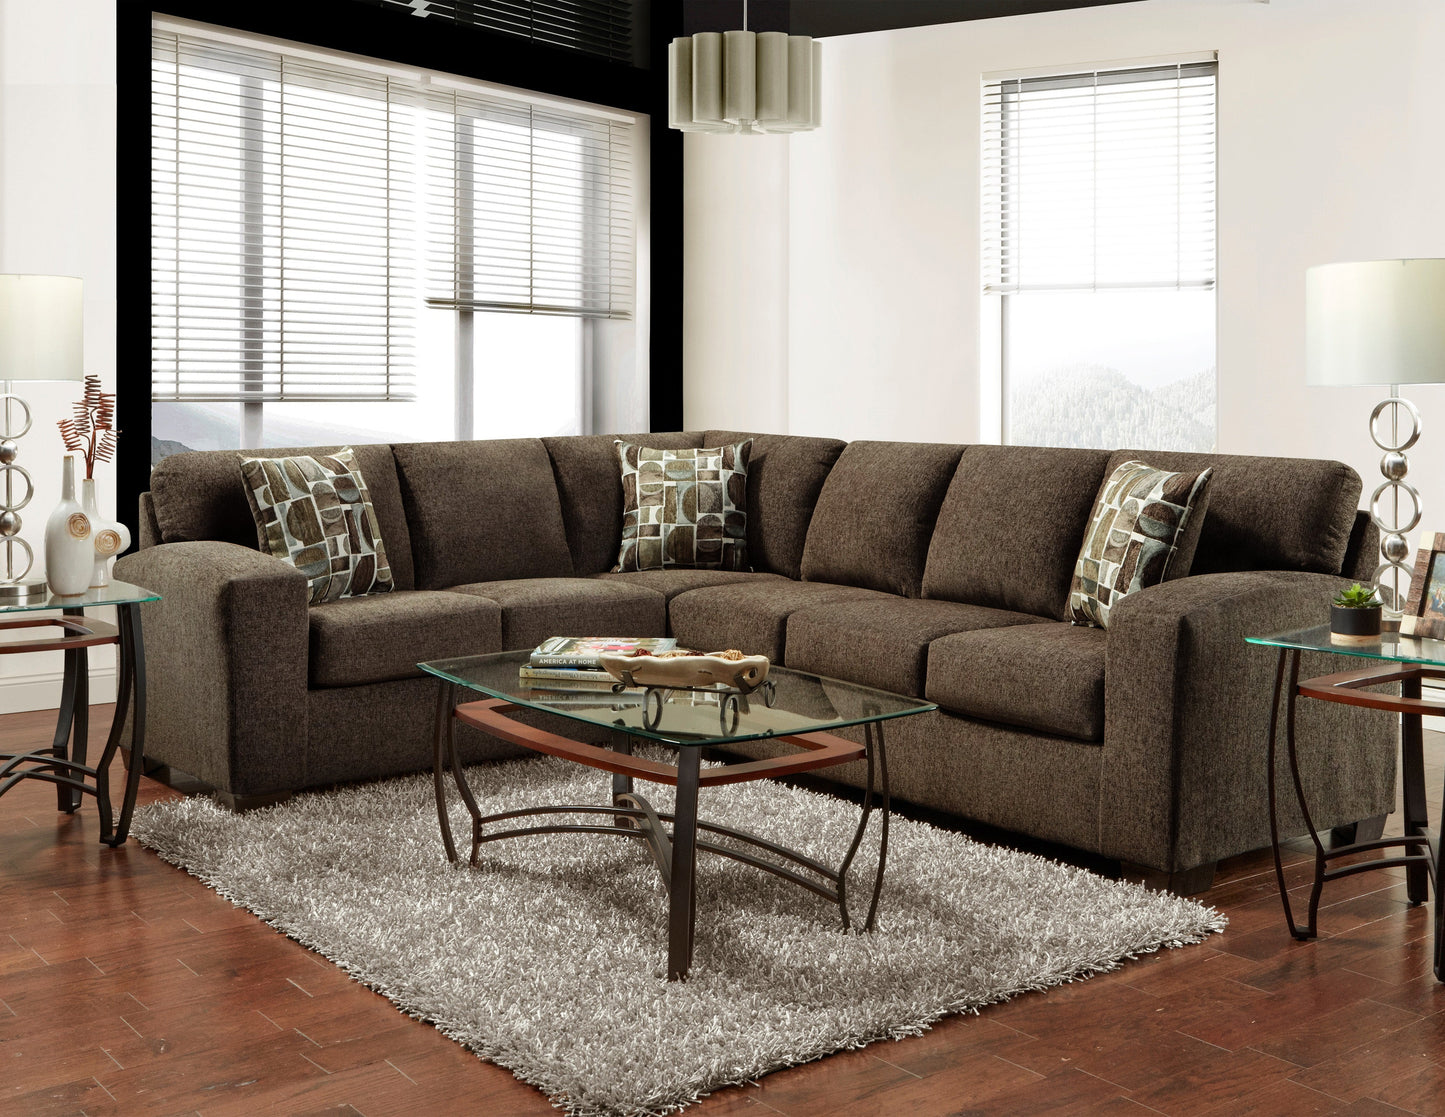 Bergen Impulse espresso Fabric Sectional Sofa